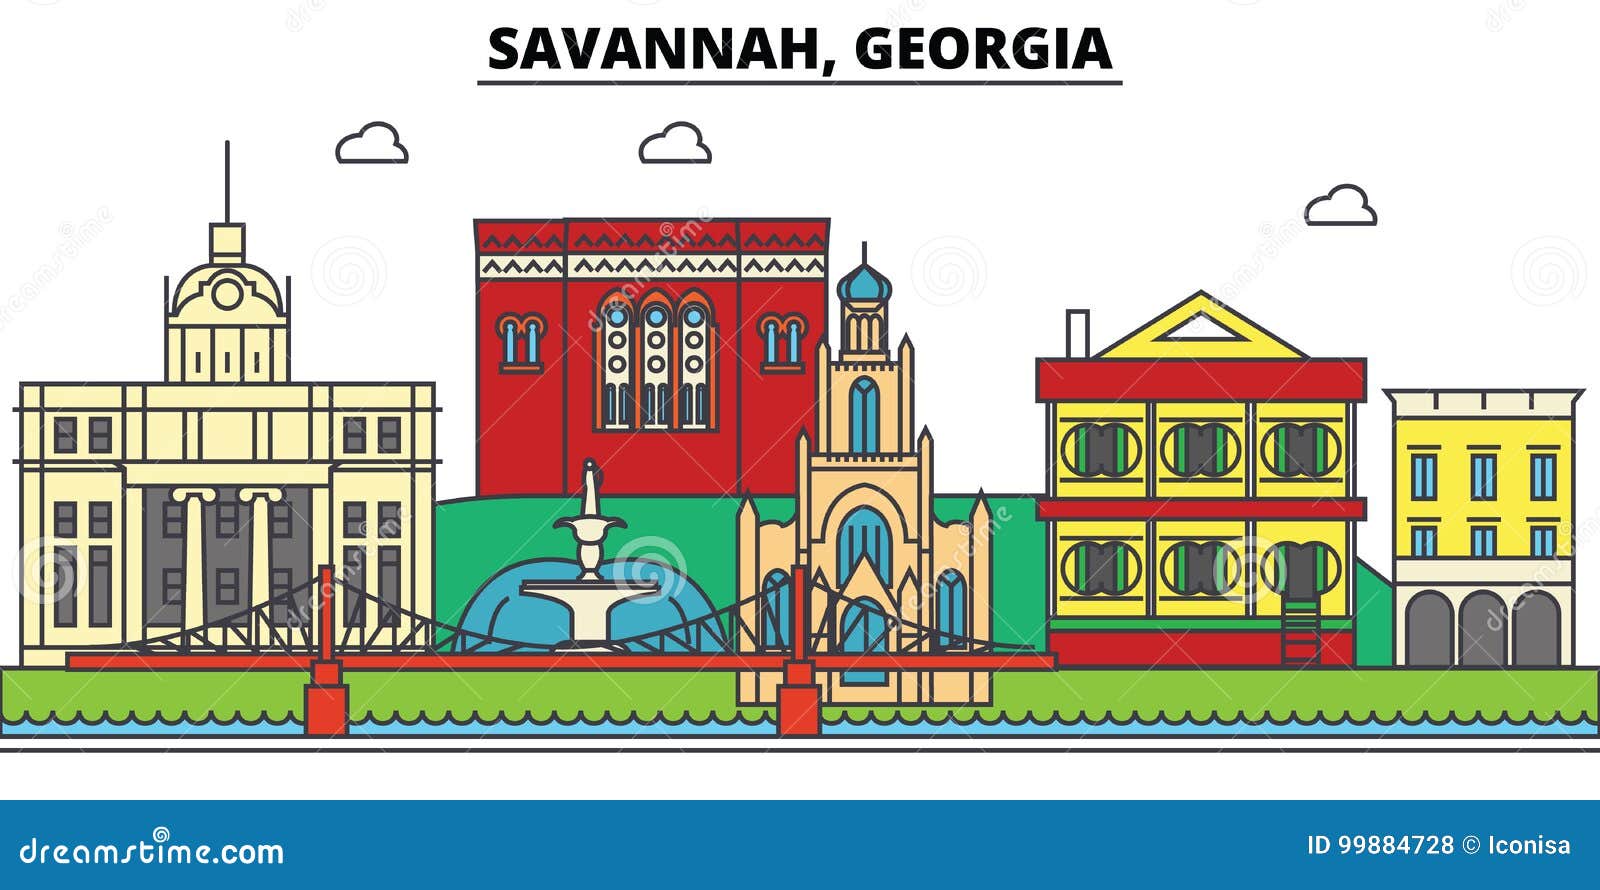 Savannah, City Skyline, Architecture, Buildings, Streets